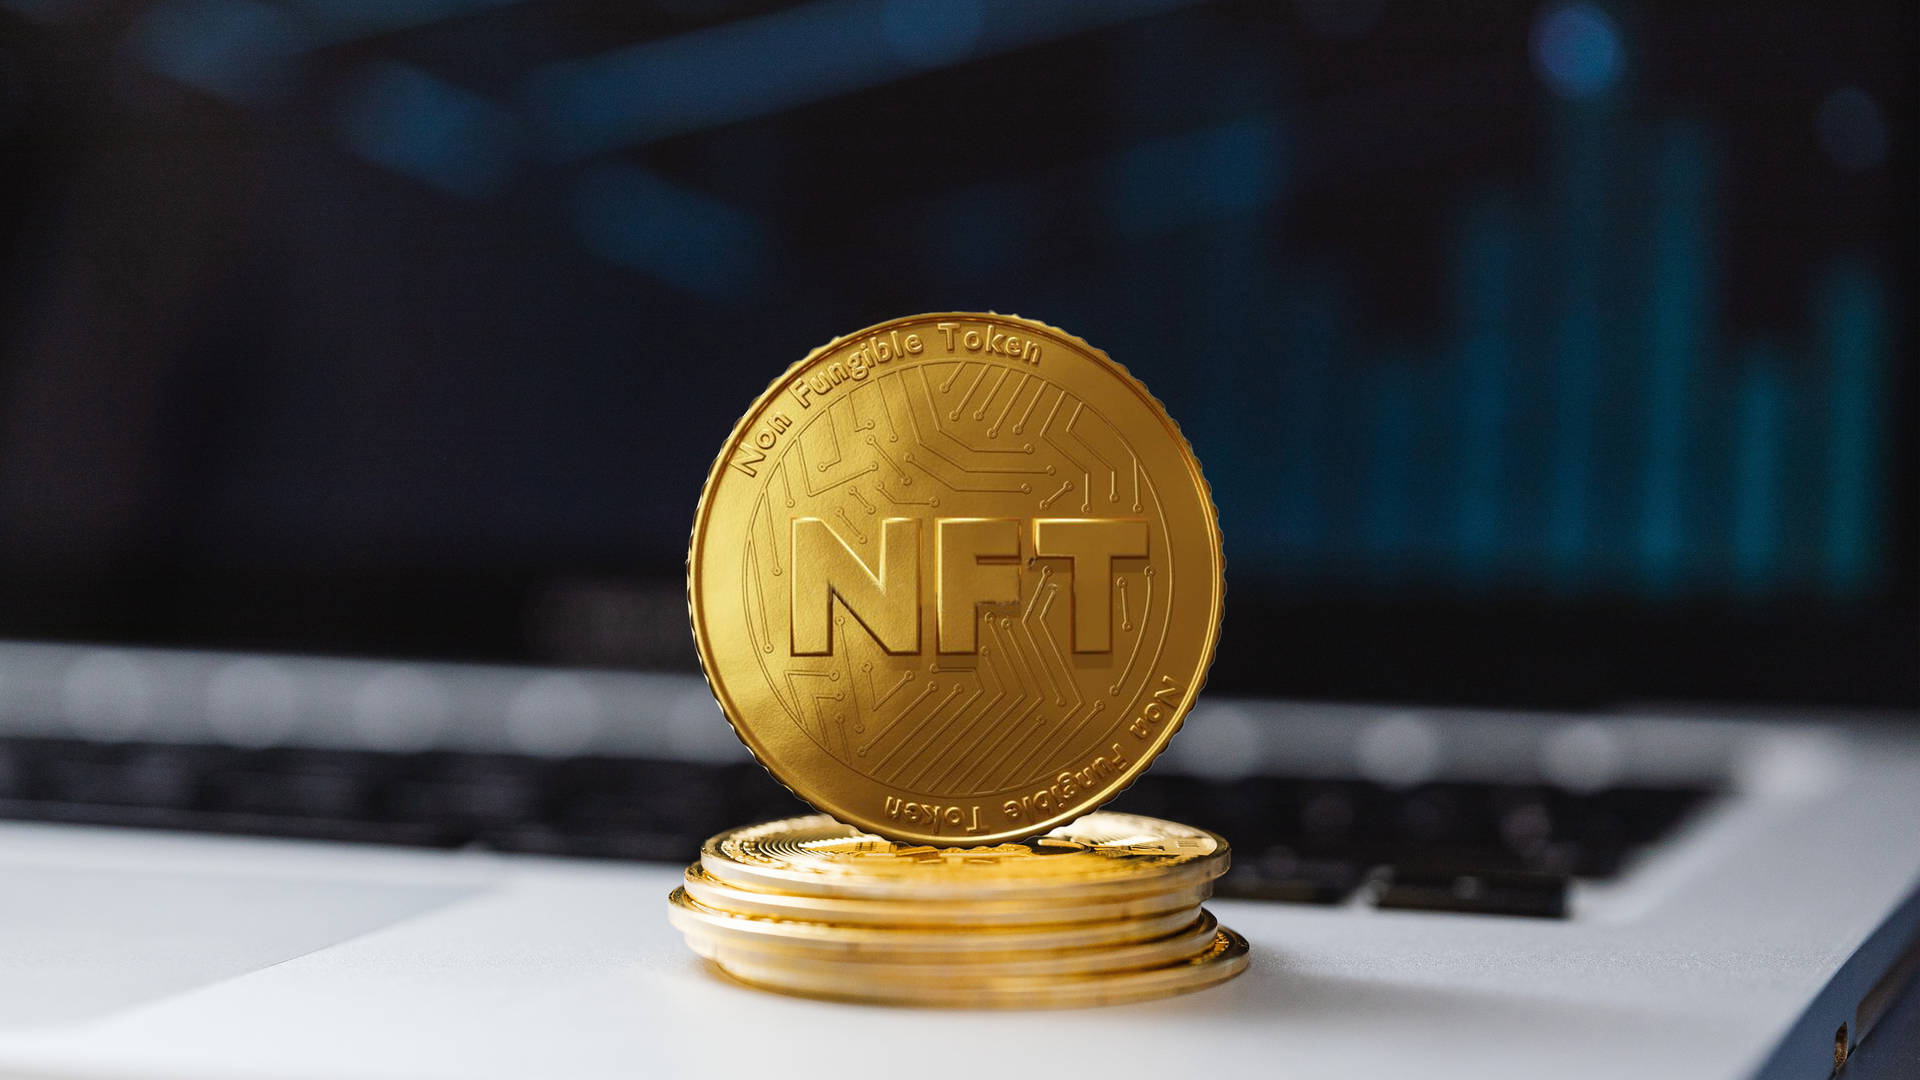 Nft Gold Coin Trophy